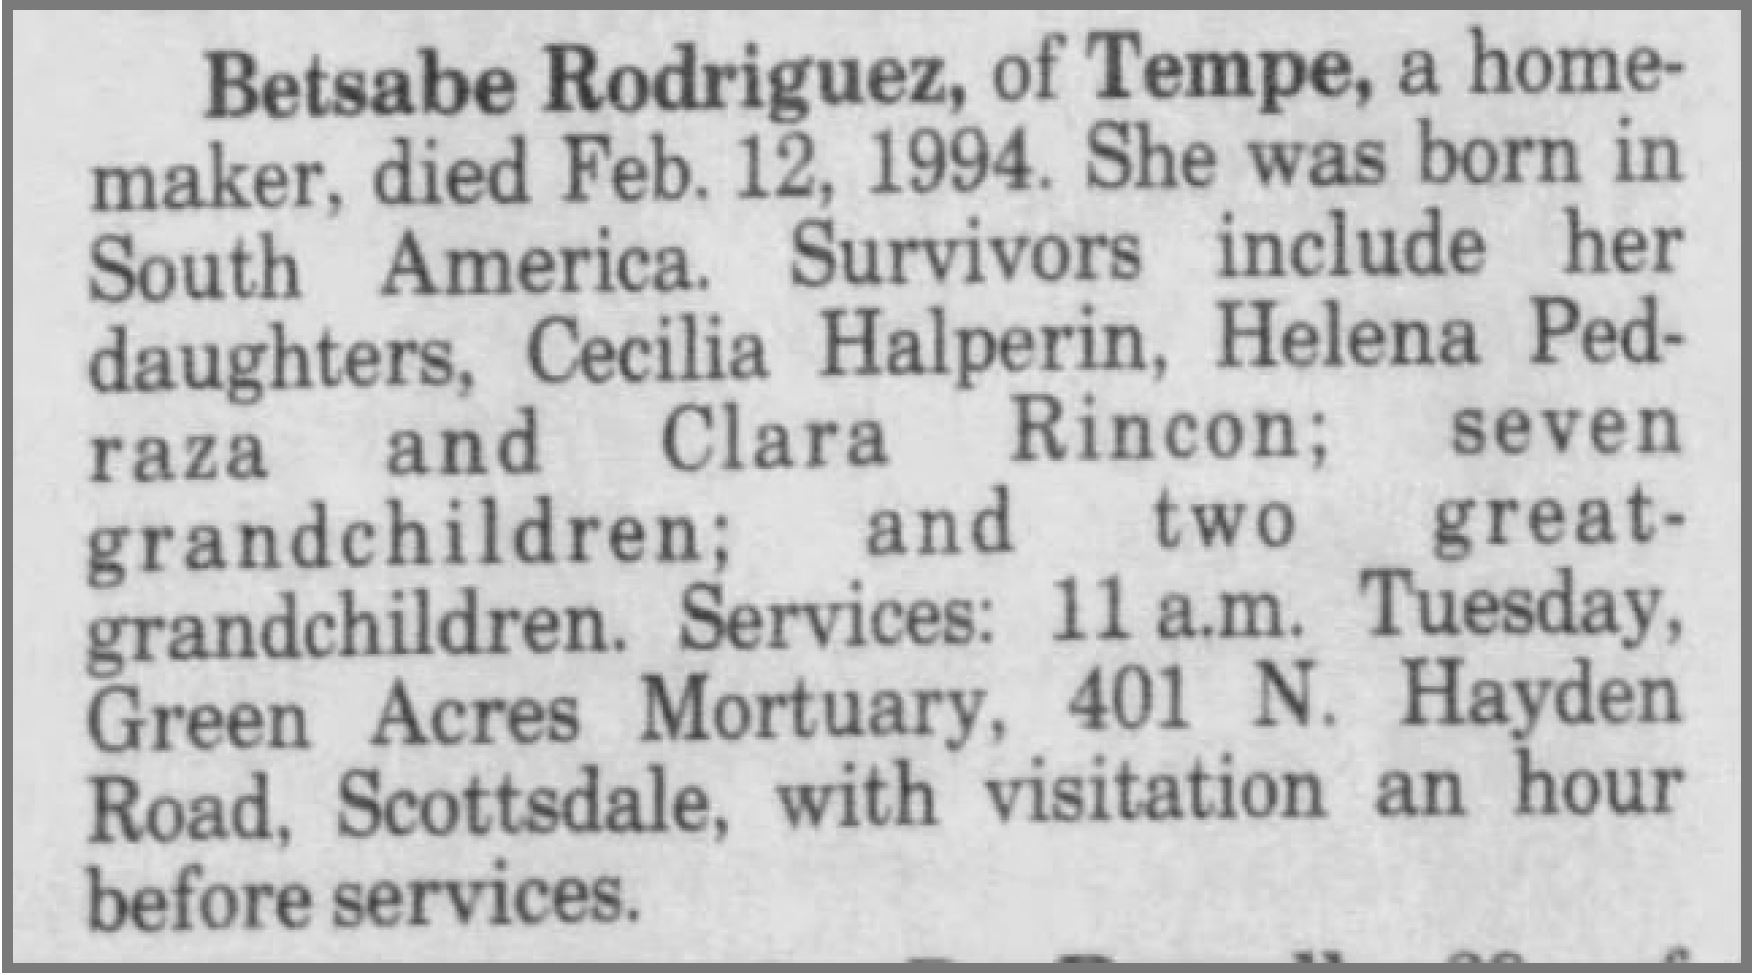 Betsabe Rodriguez. (d. Feb. 12, 1994). Obituary, Arizona Republic, children Cecilia Halperin, Helena Ped-raza, Clara Rincon. Arizona Republic.